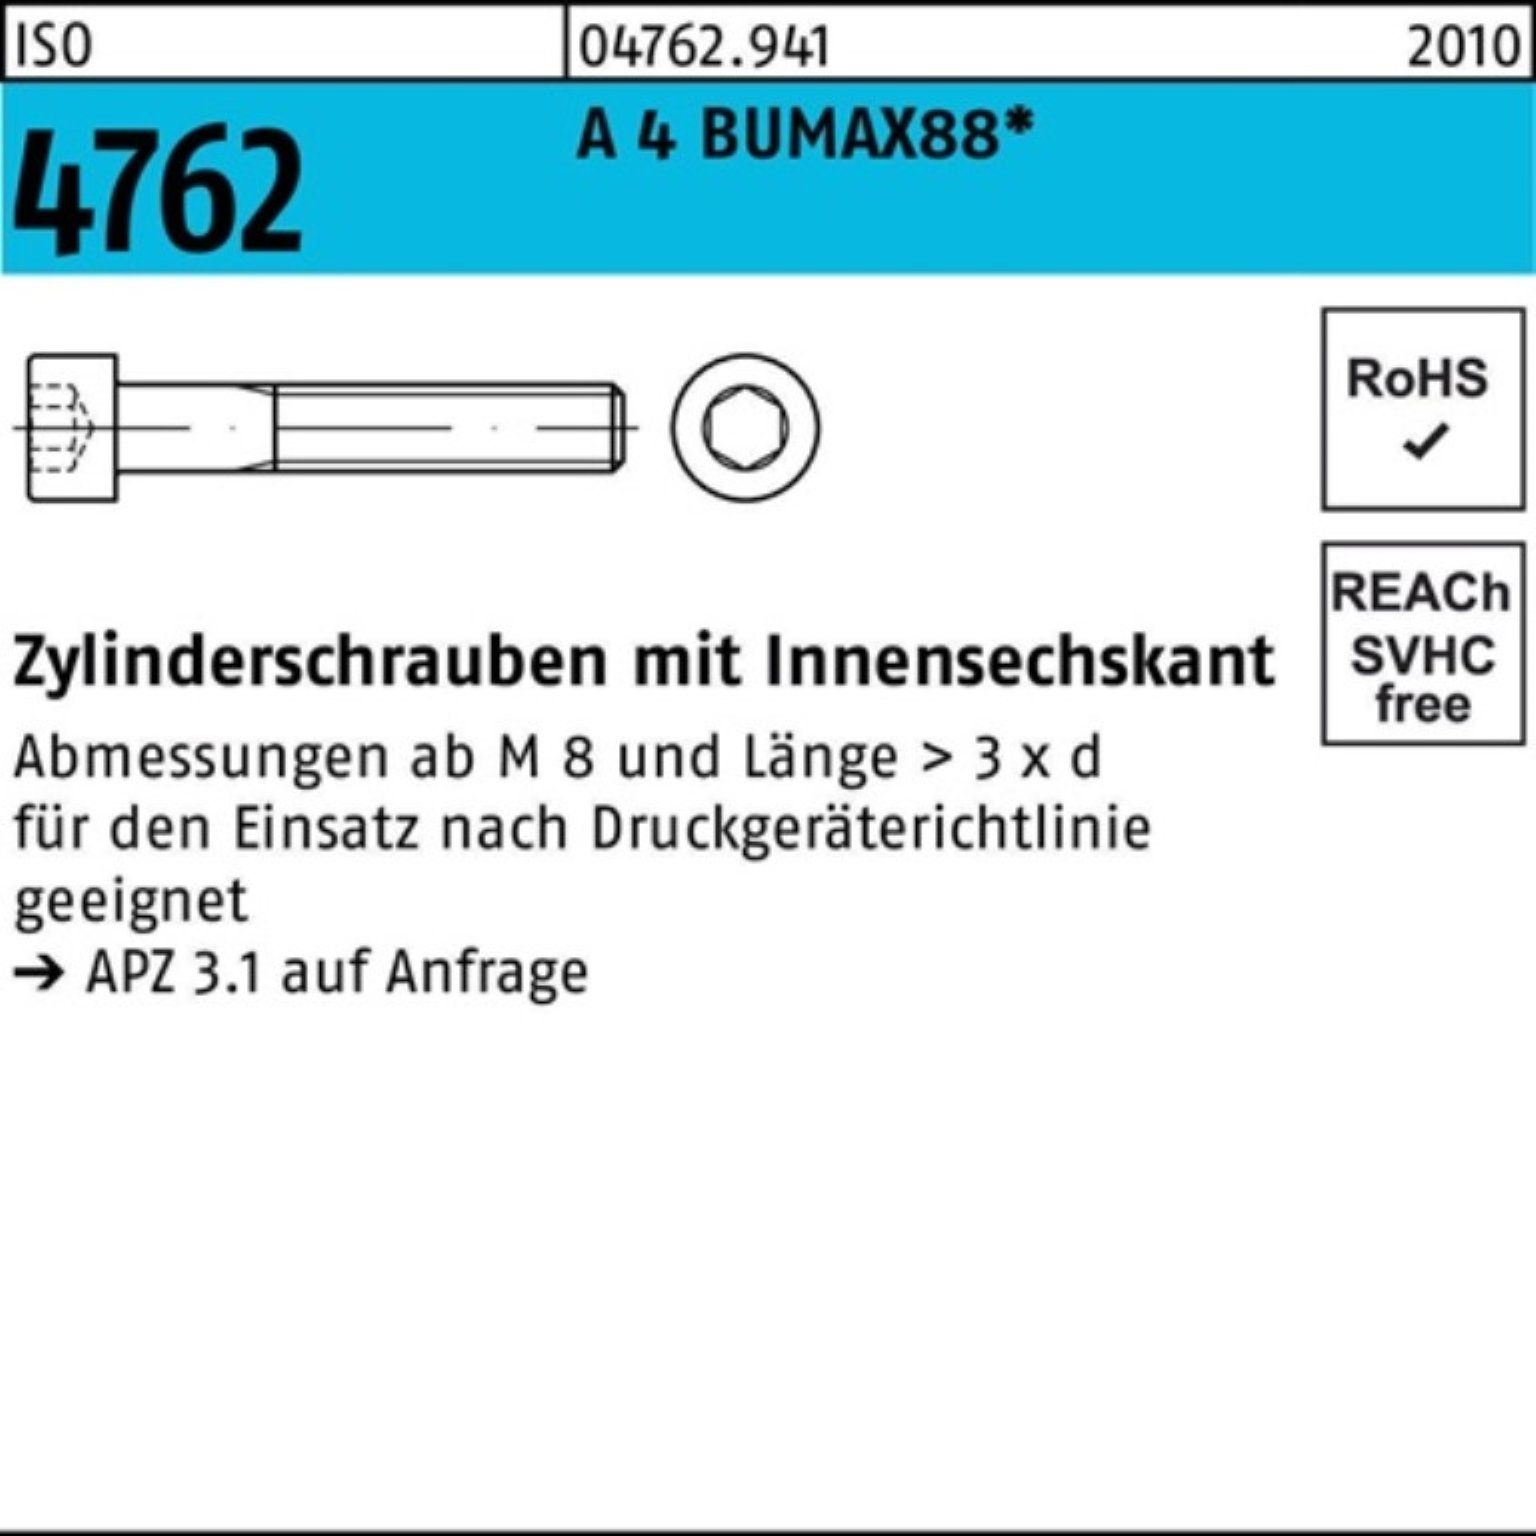 4762 500er Zylinderschraube 20 M3x Pack ISO Innen-6kt A Bufab 4 Zylinderschraube 500 BUMAX88